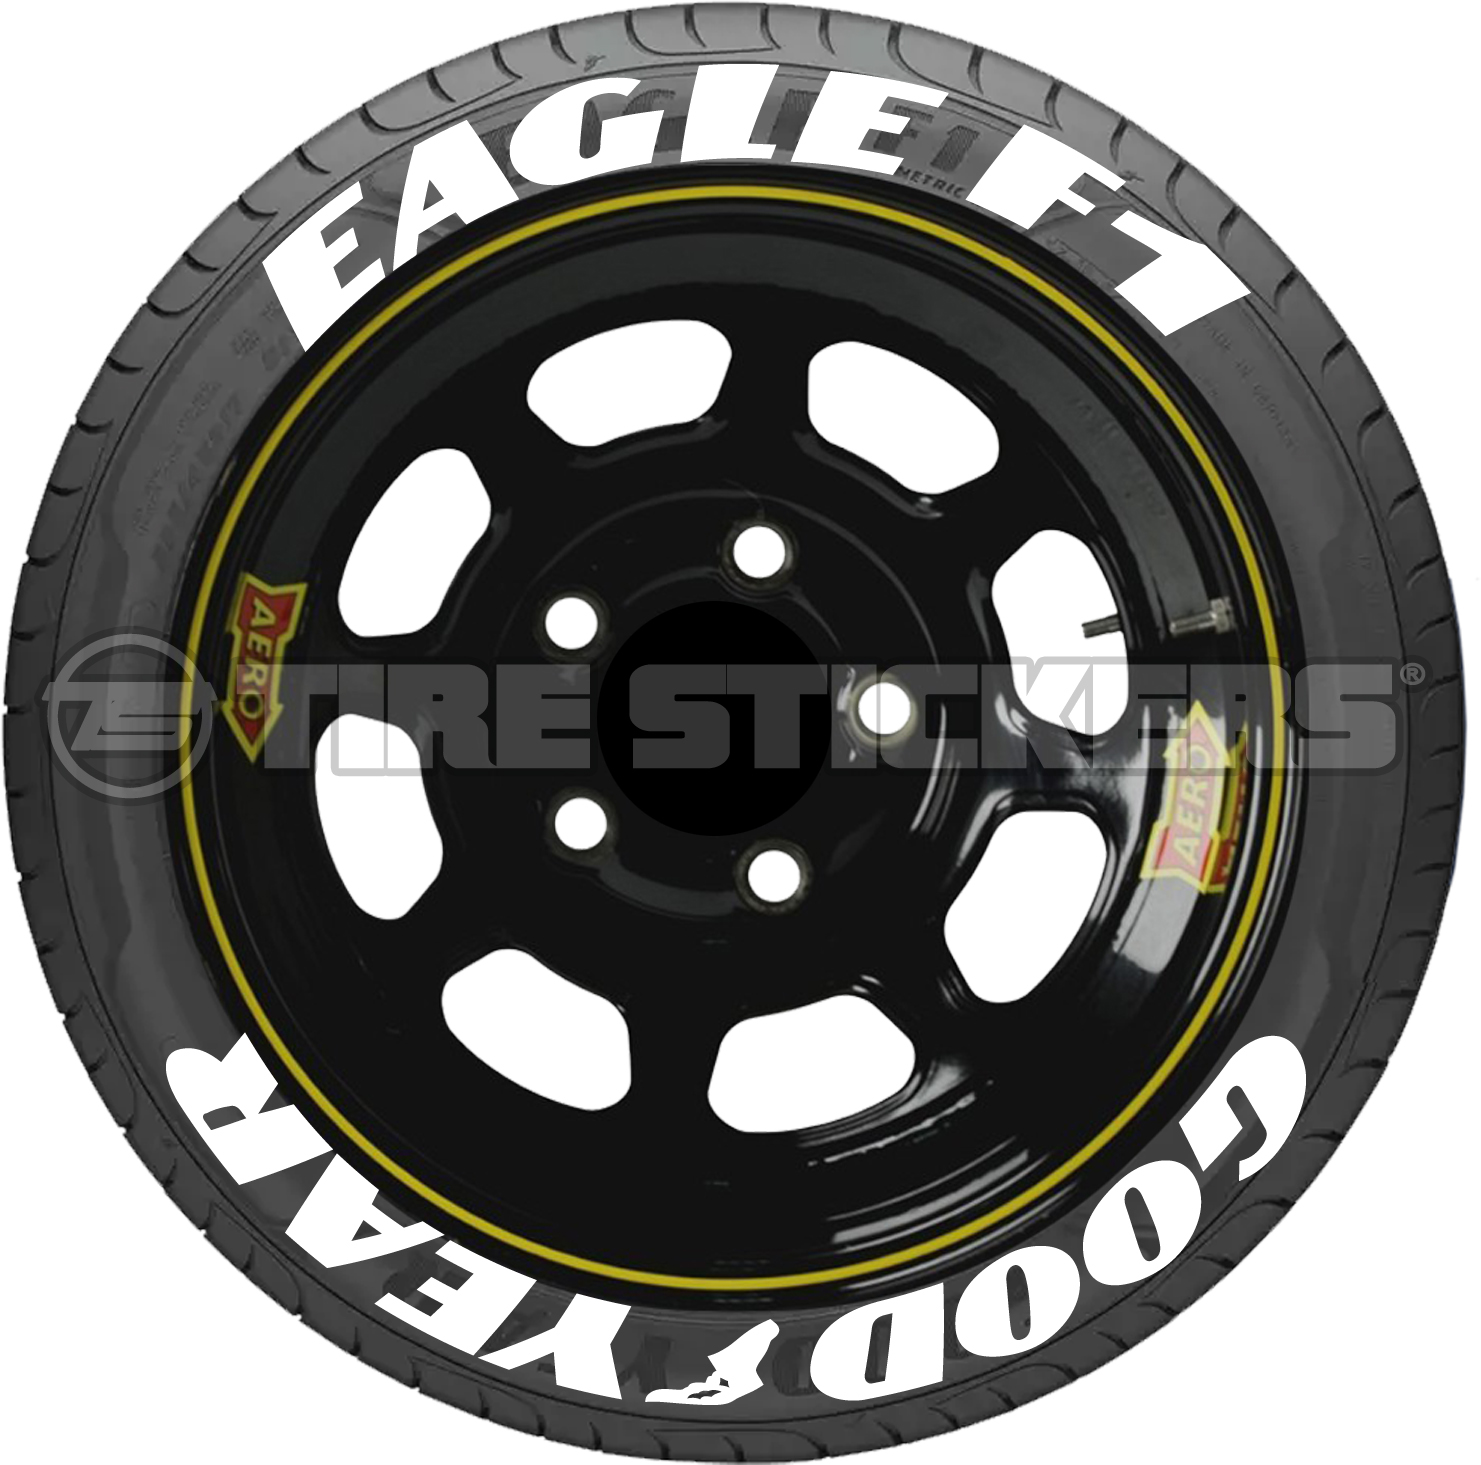 GOODYEAR Tyres Vinyl Decals Stickers Motorbike Car Racing Nascar 3313-0219